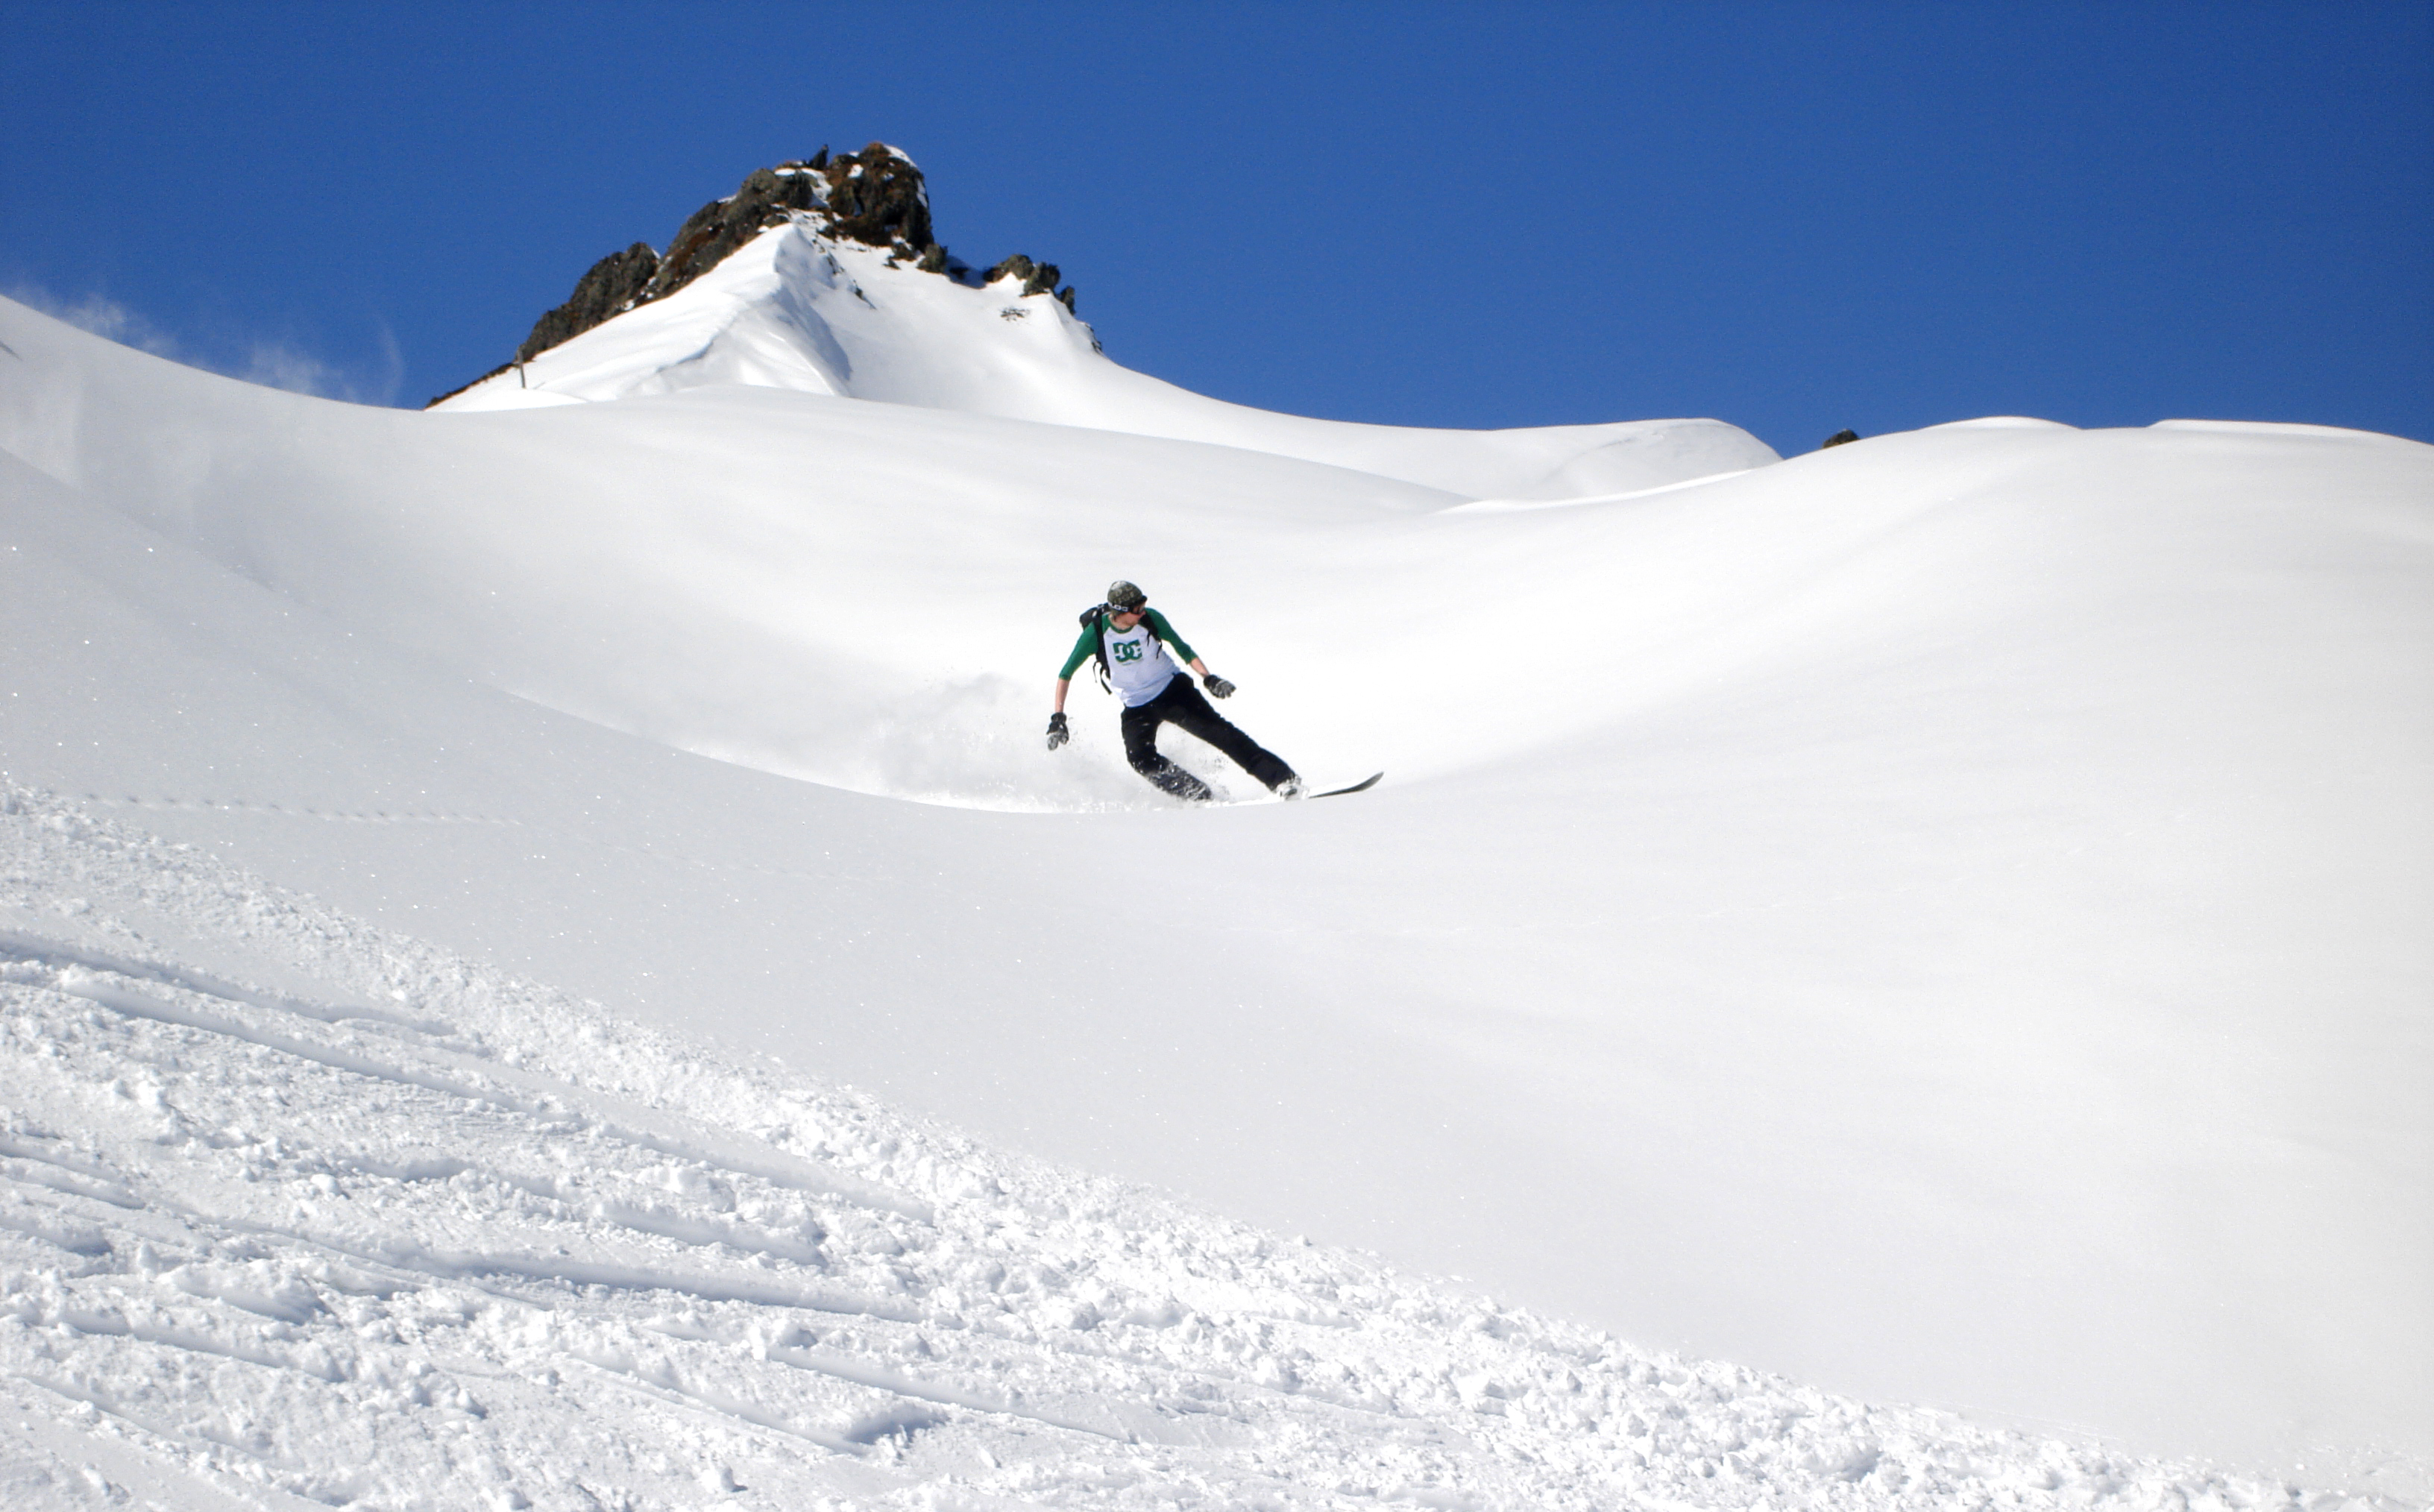 Snowboarding - Wikipedia